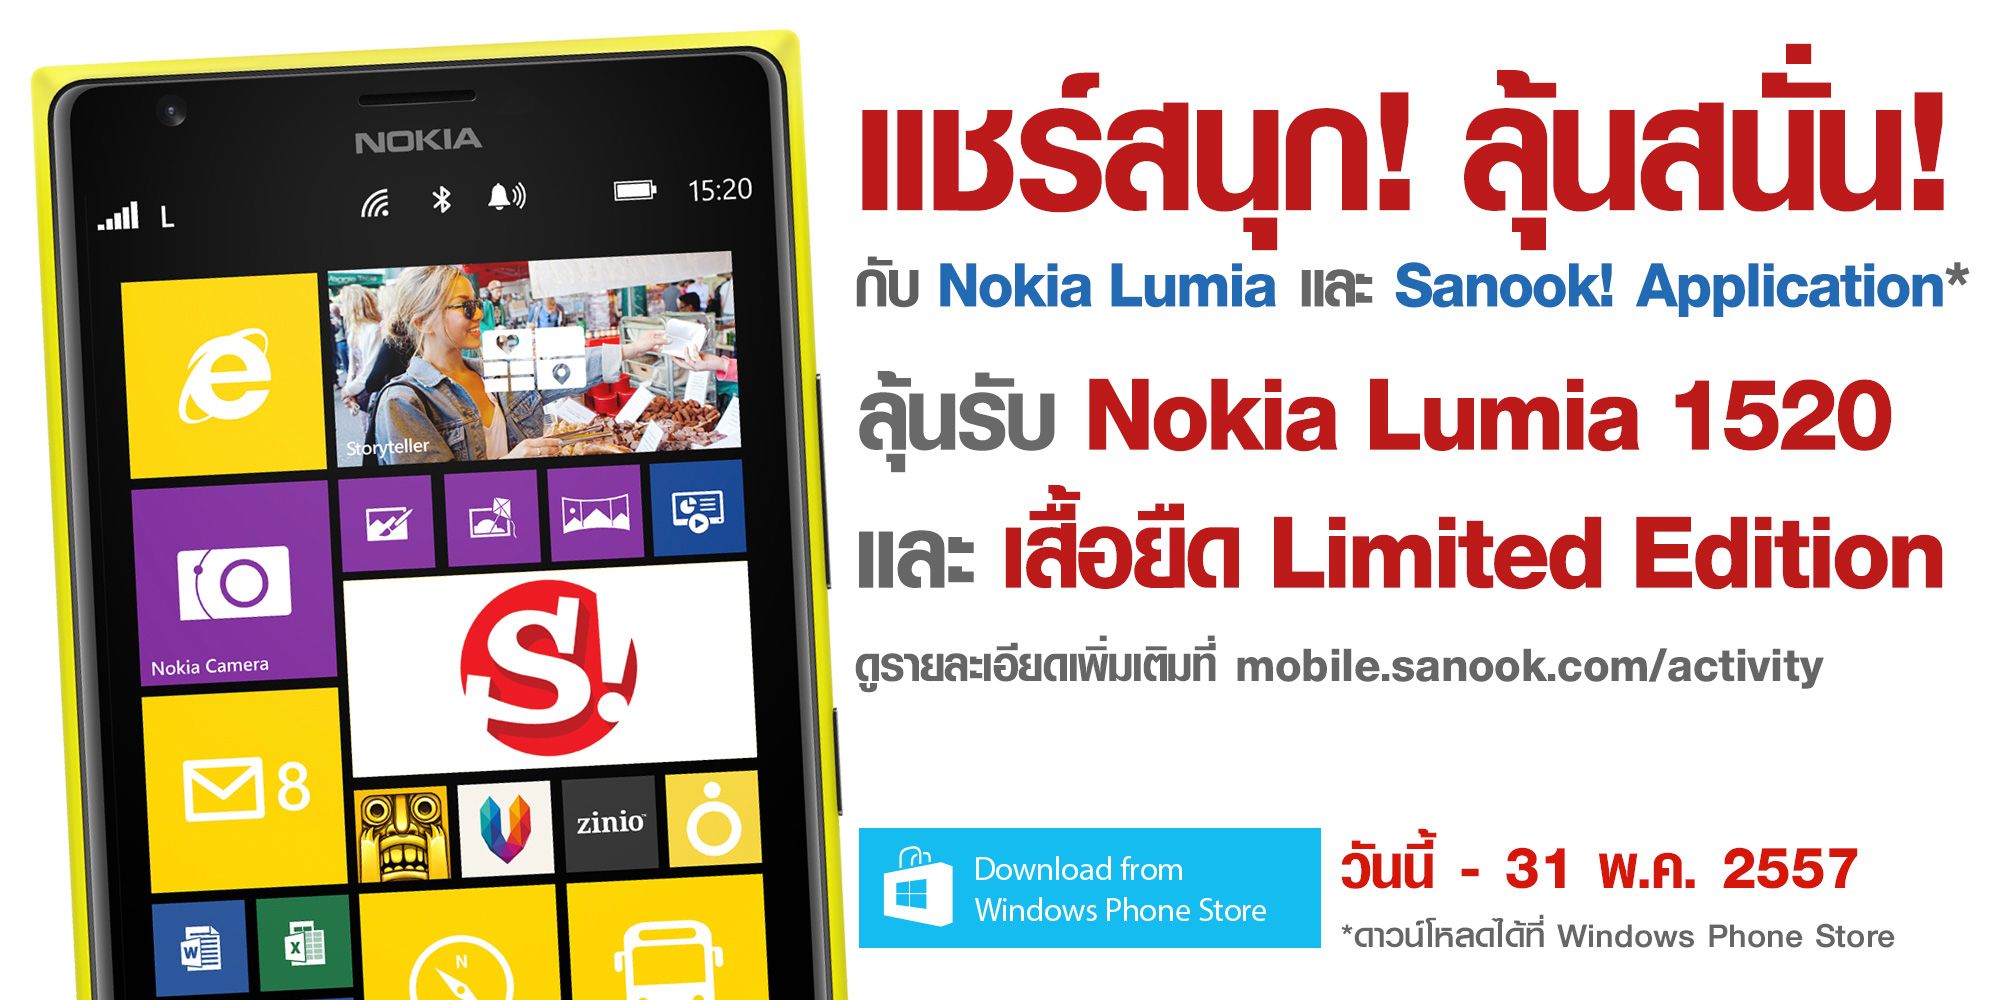 Sanook! Application for Windows Phone